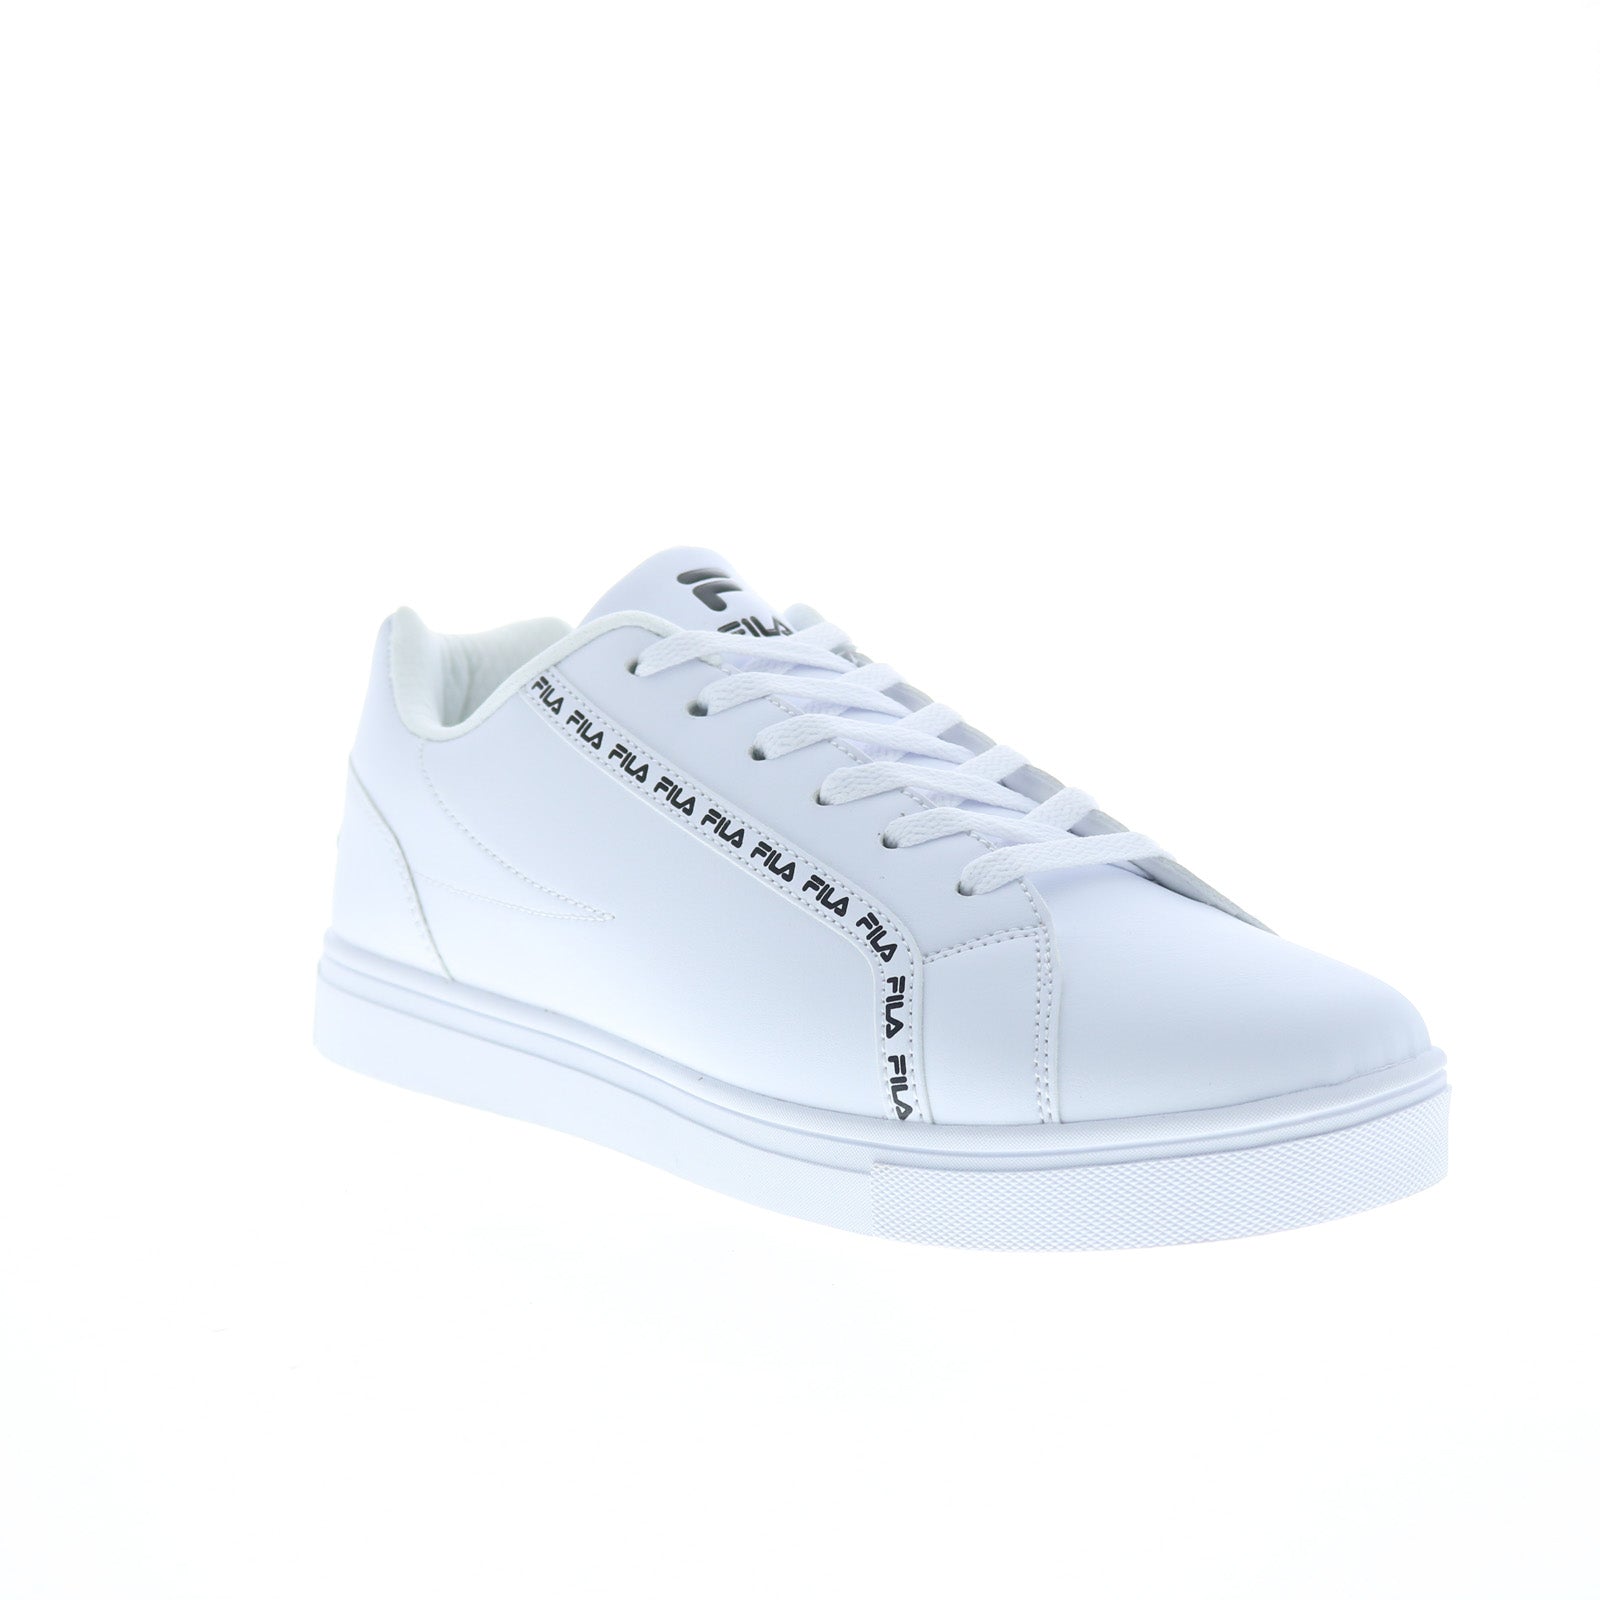 Fila Monetary Sho 1CM01758-120 Mens - Shoes Synthetic White Ruze Sneakers Lifestyle